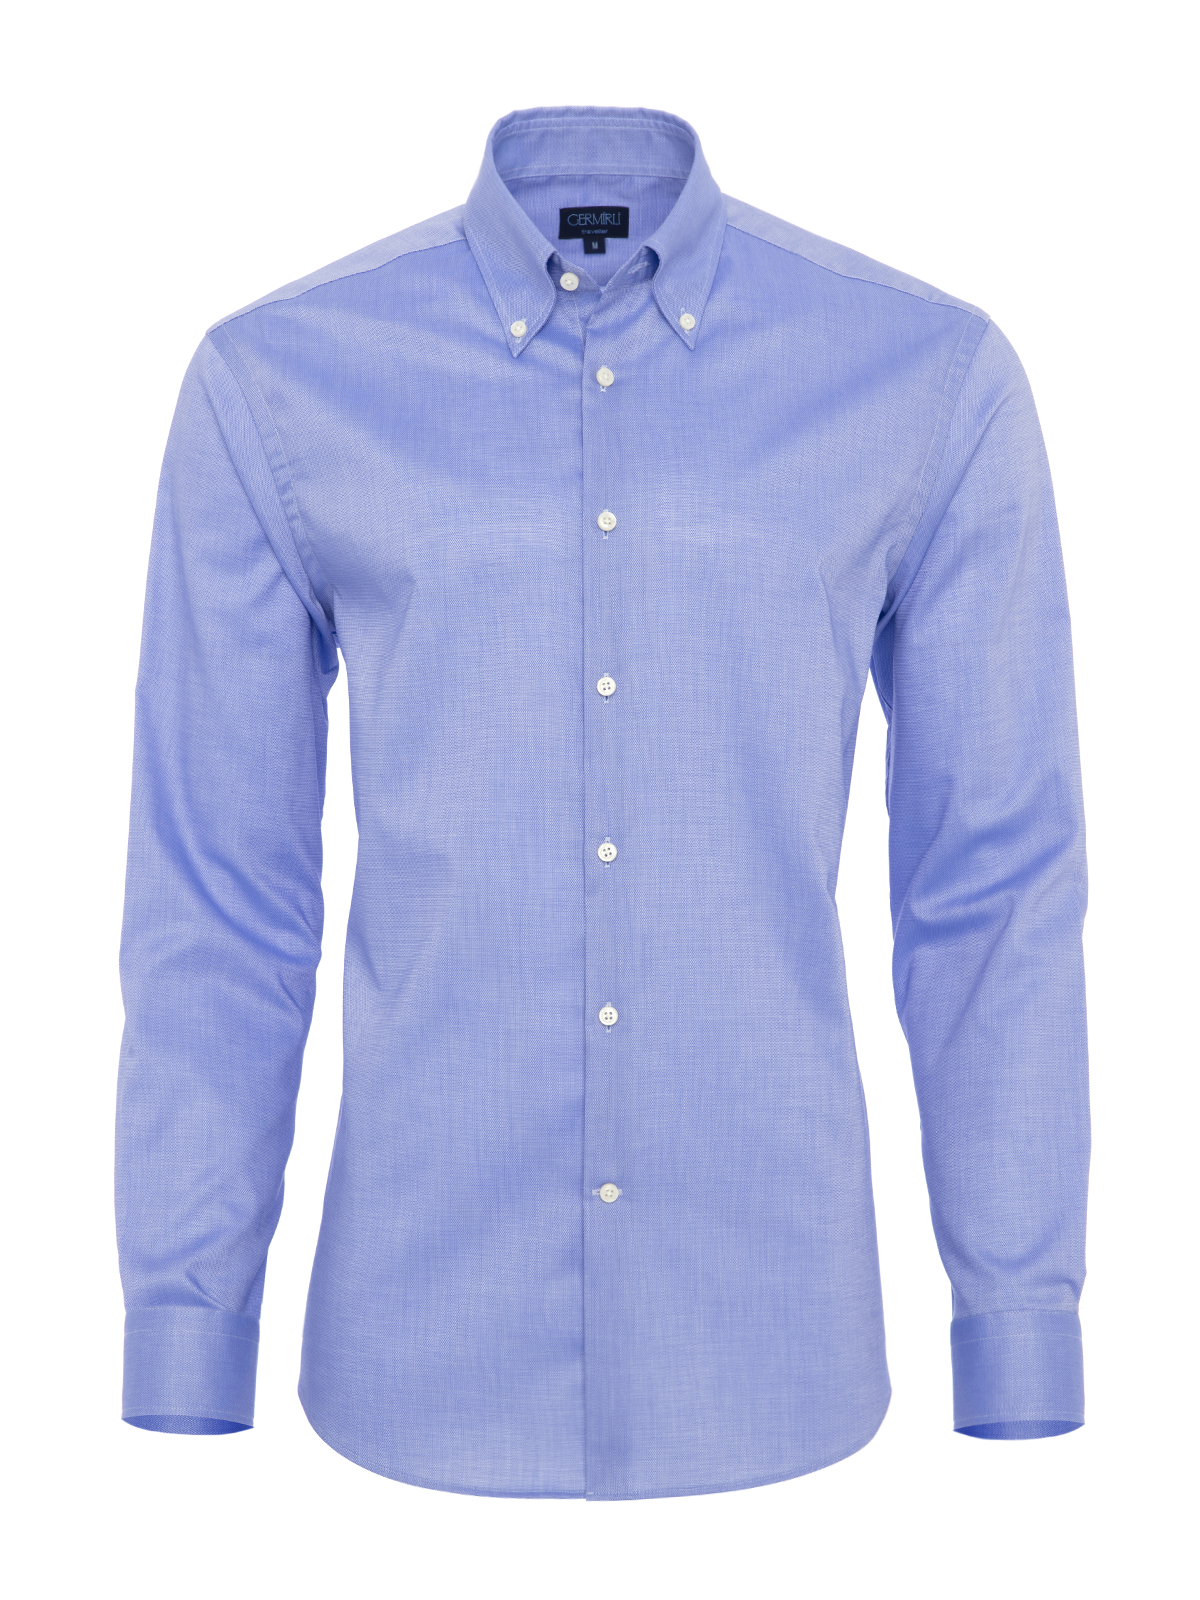 Germirli - Germirli Non Iron Light Blue Oxford Button Down Collar Tailor Fit Shirt